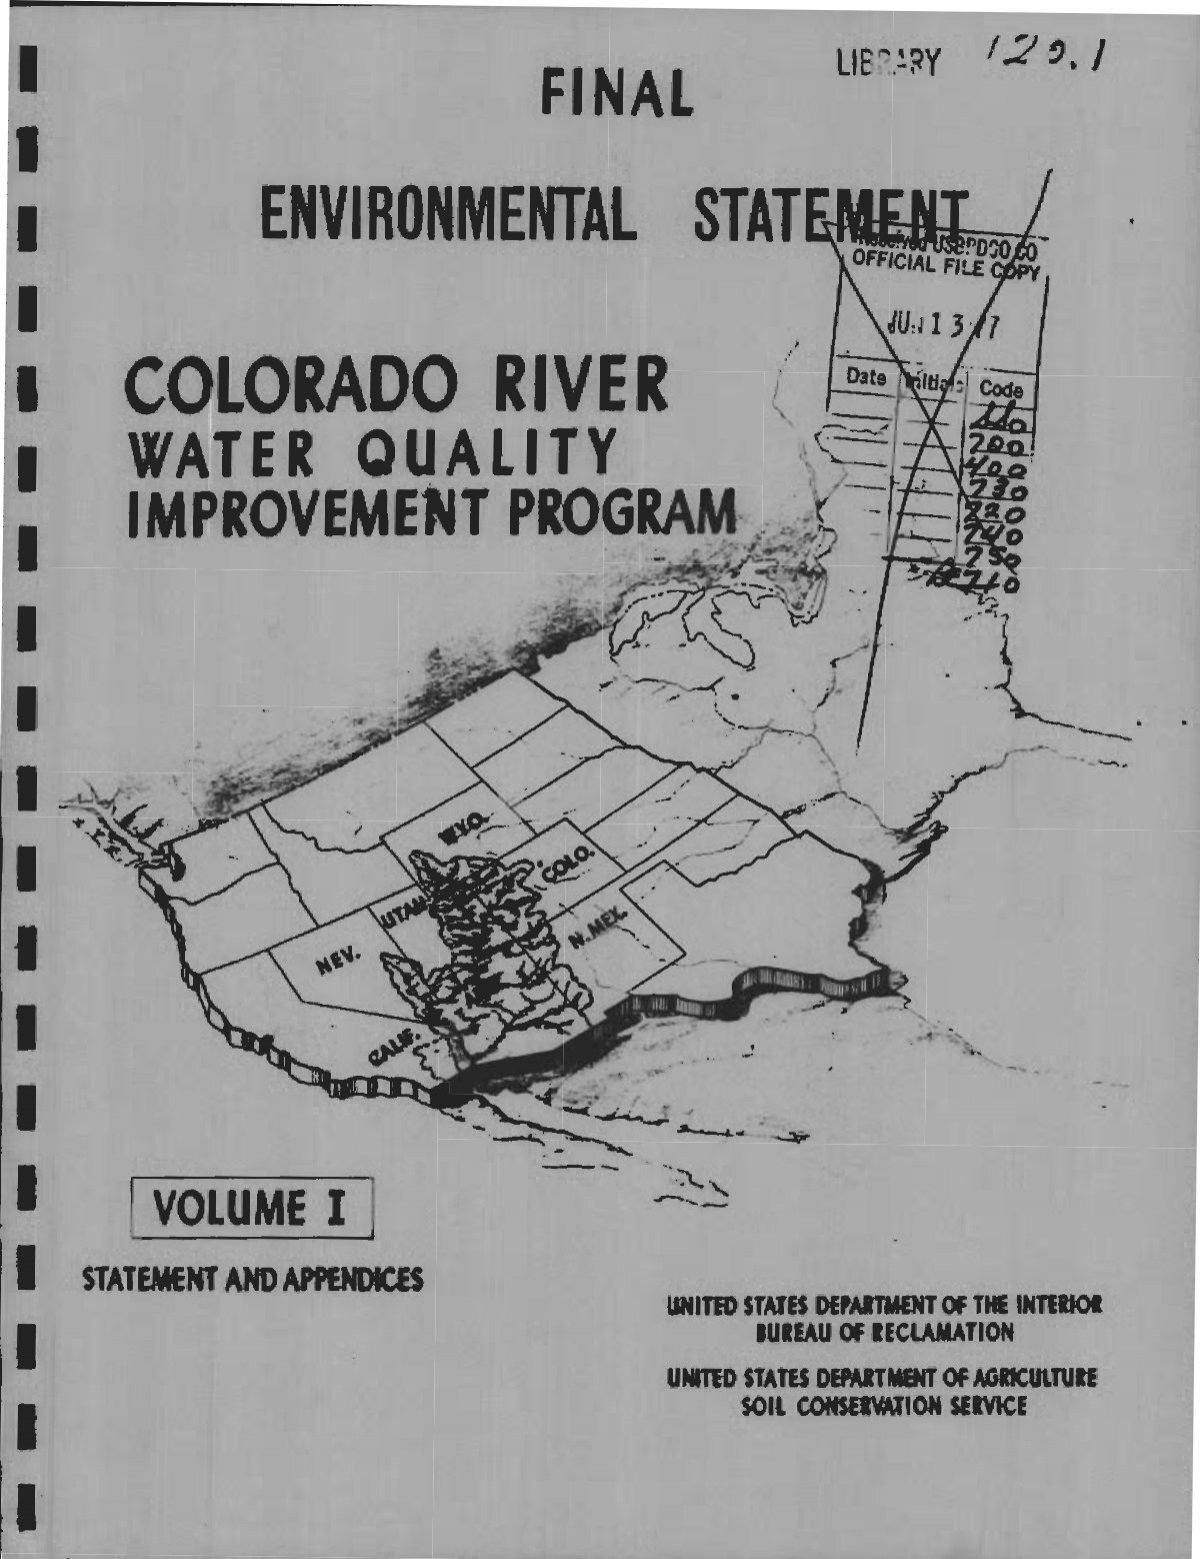 Colorado River Water Quality Improvement Program, Final